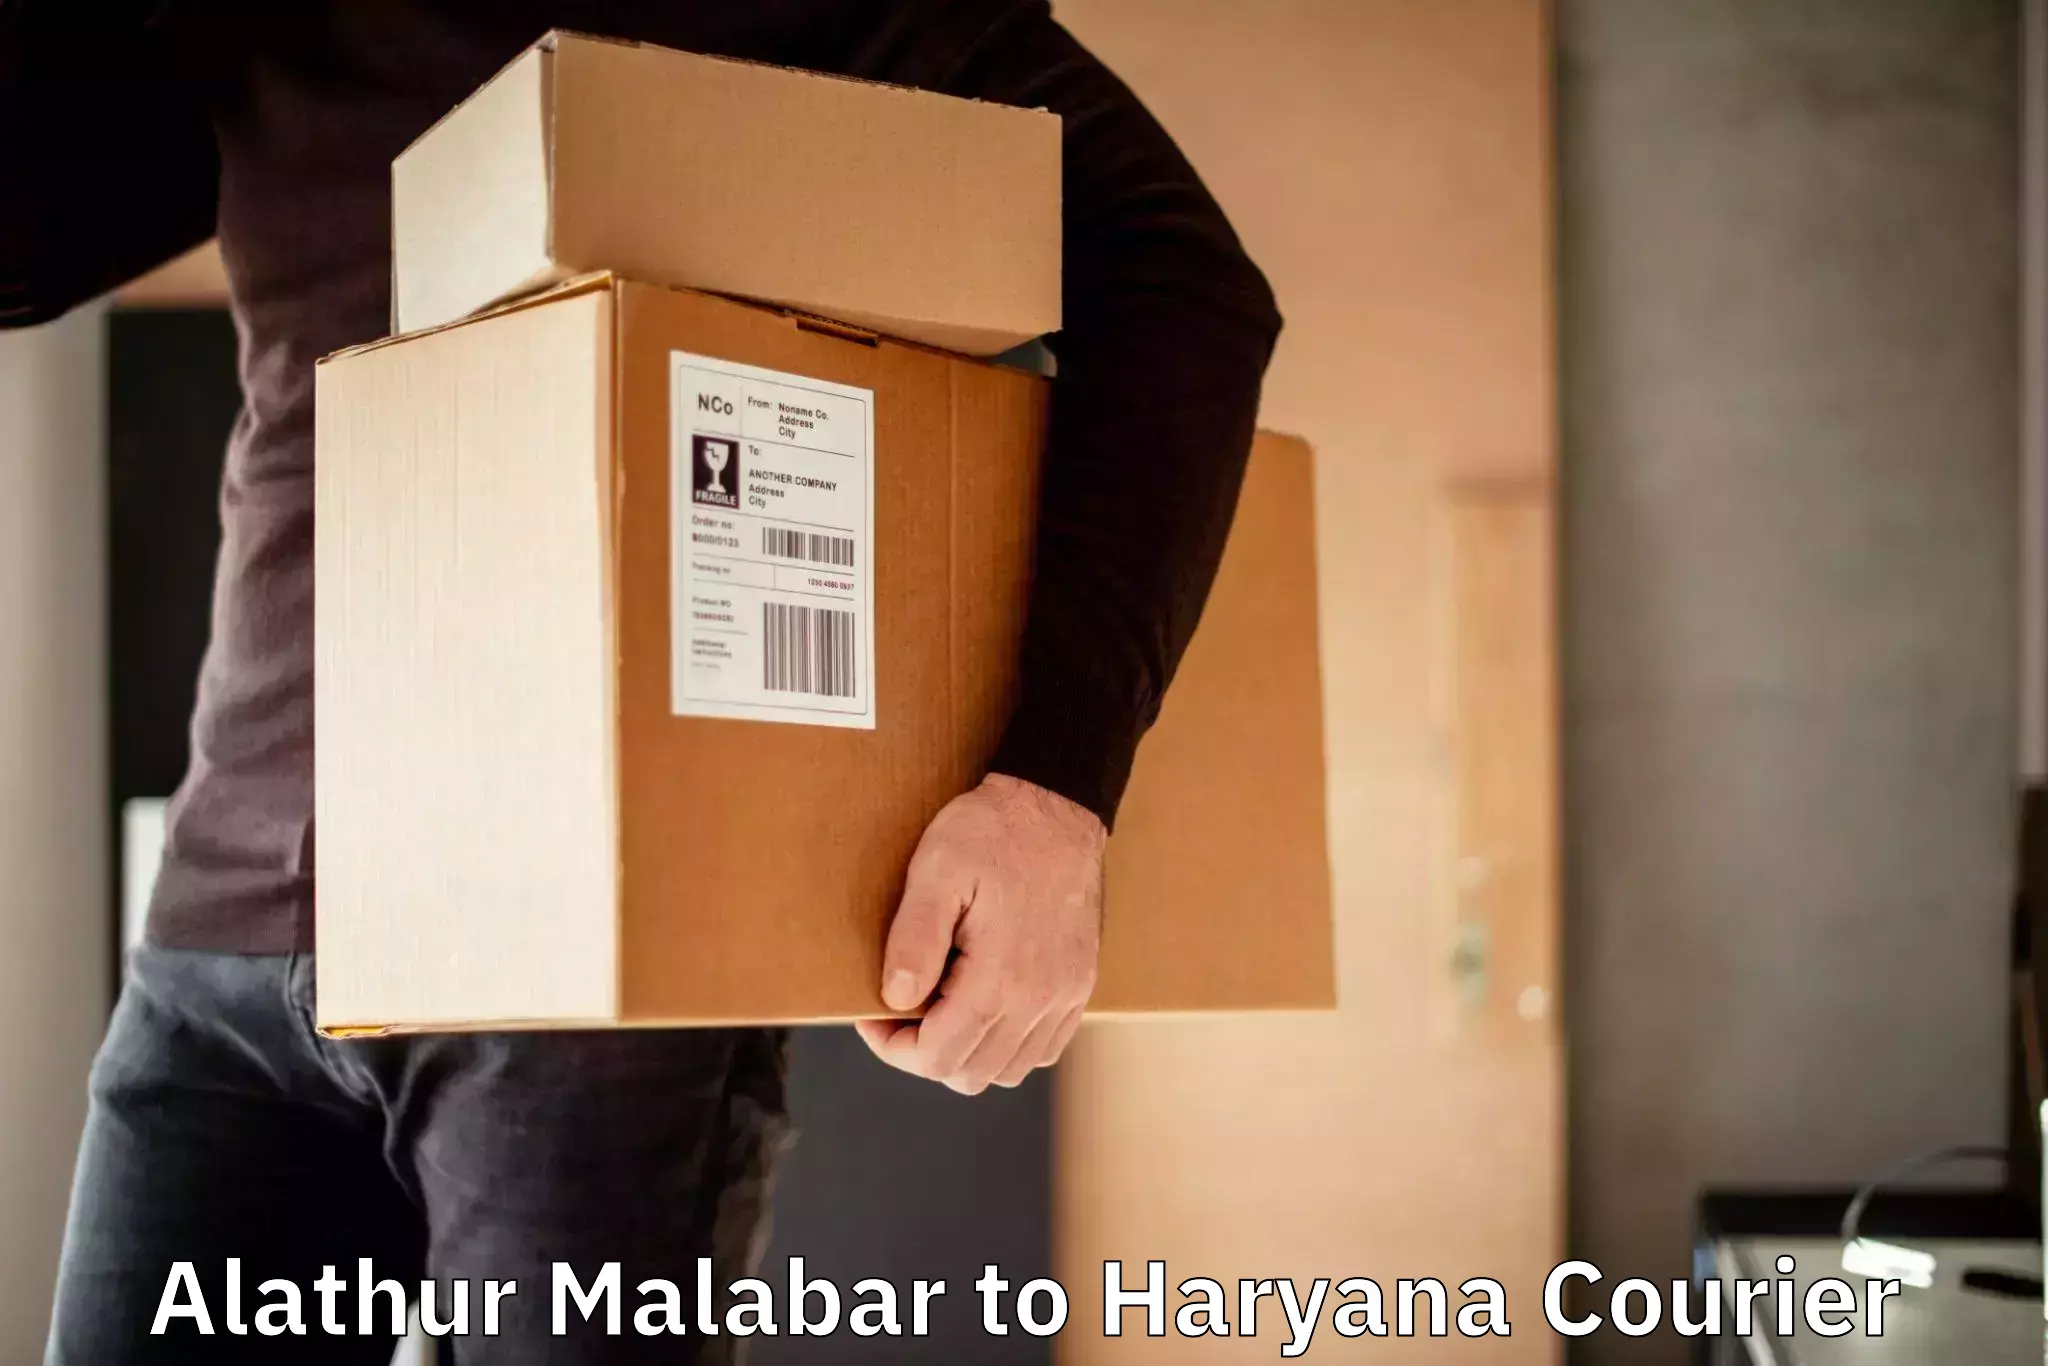 Express logistics providers Alathur Malabar to Haryana